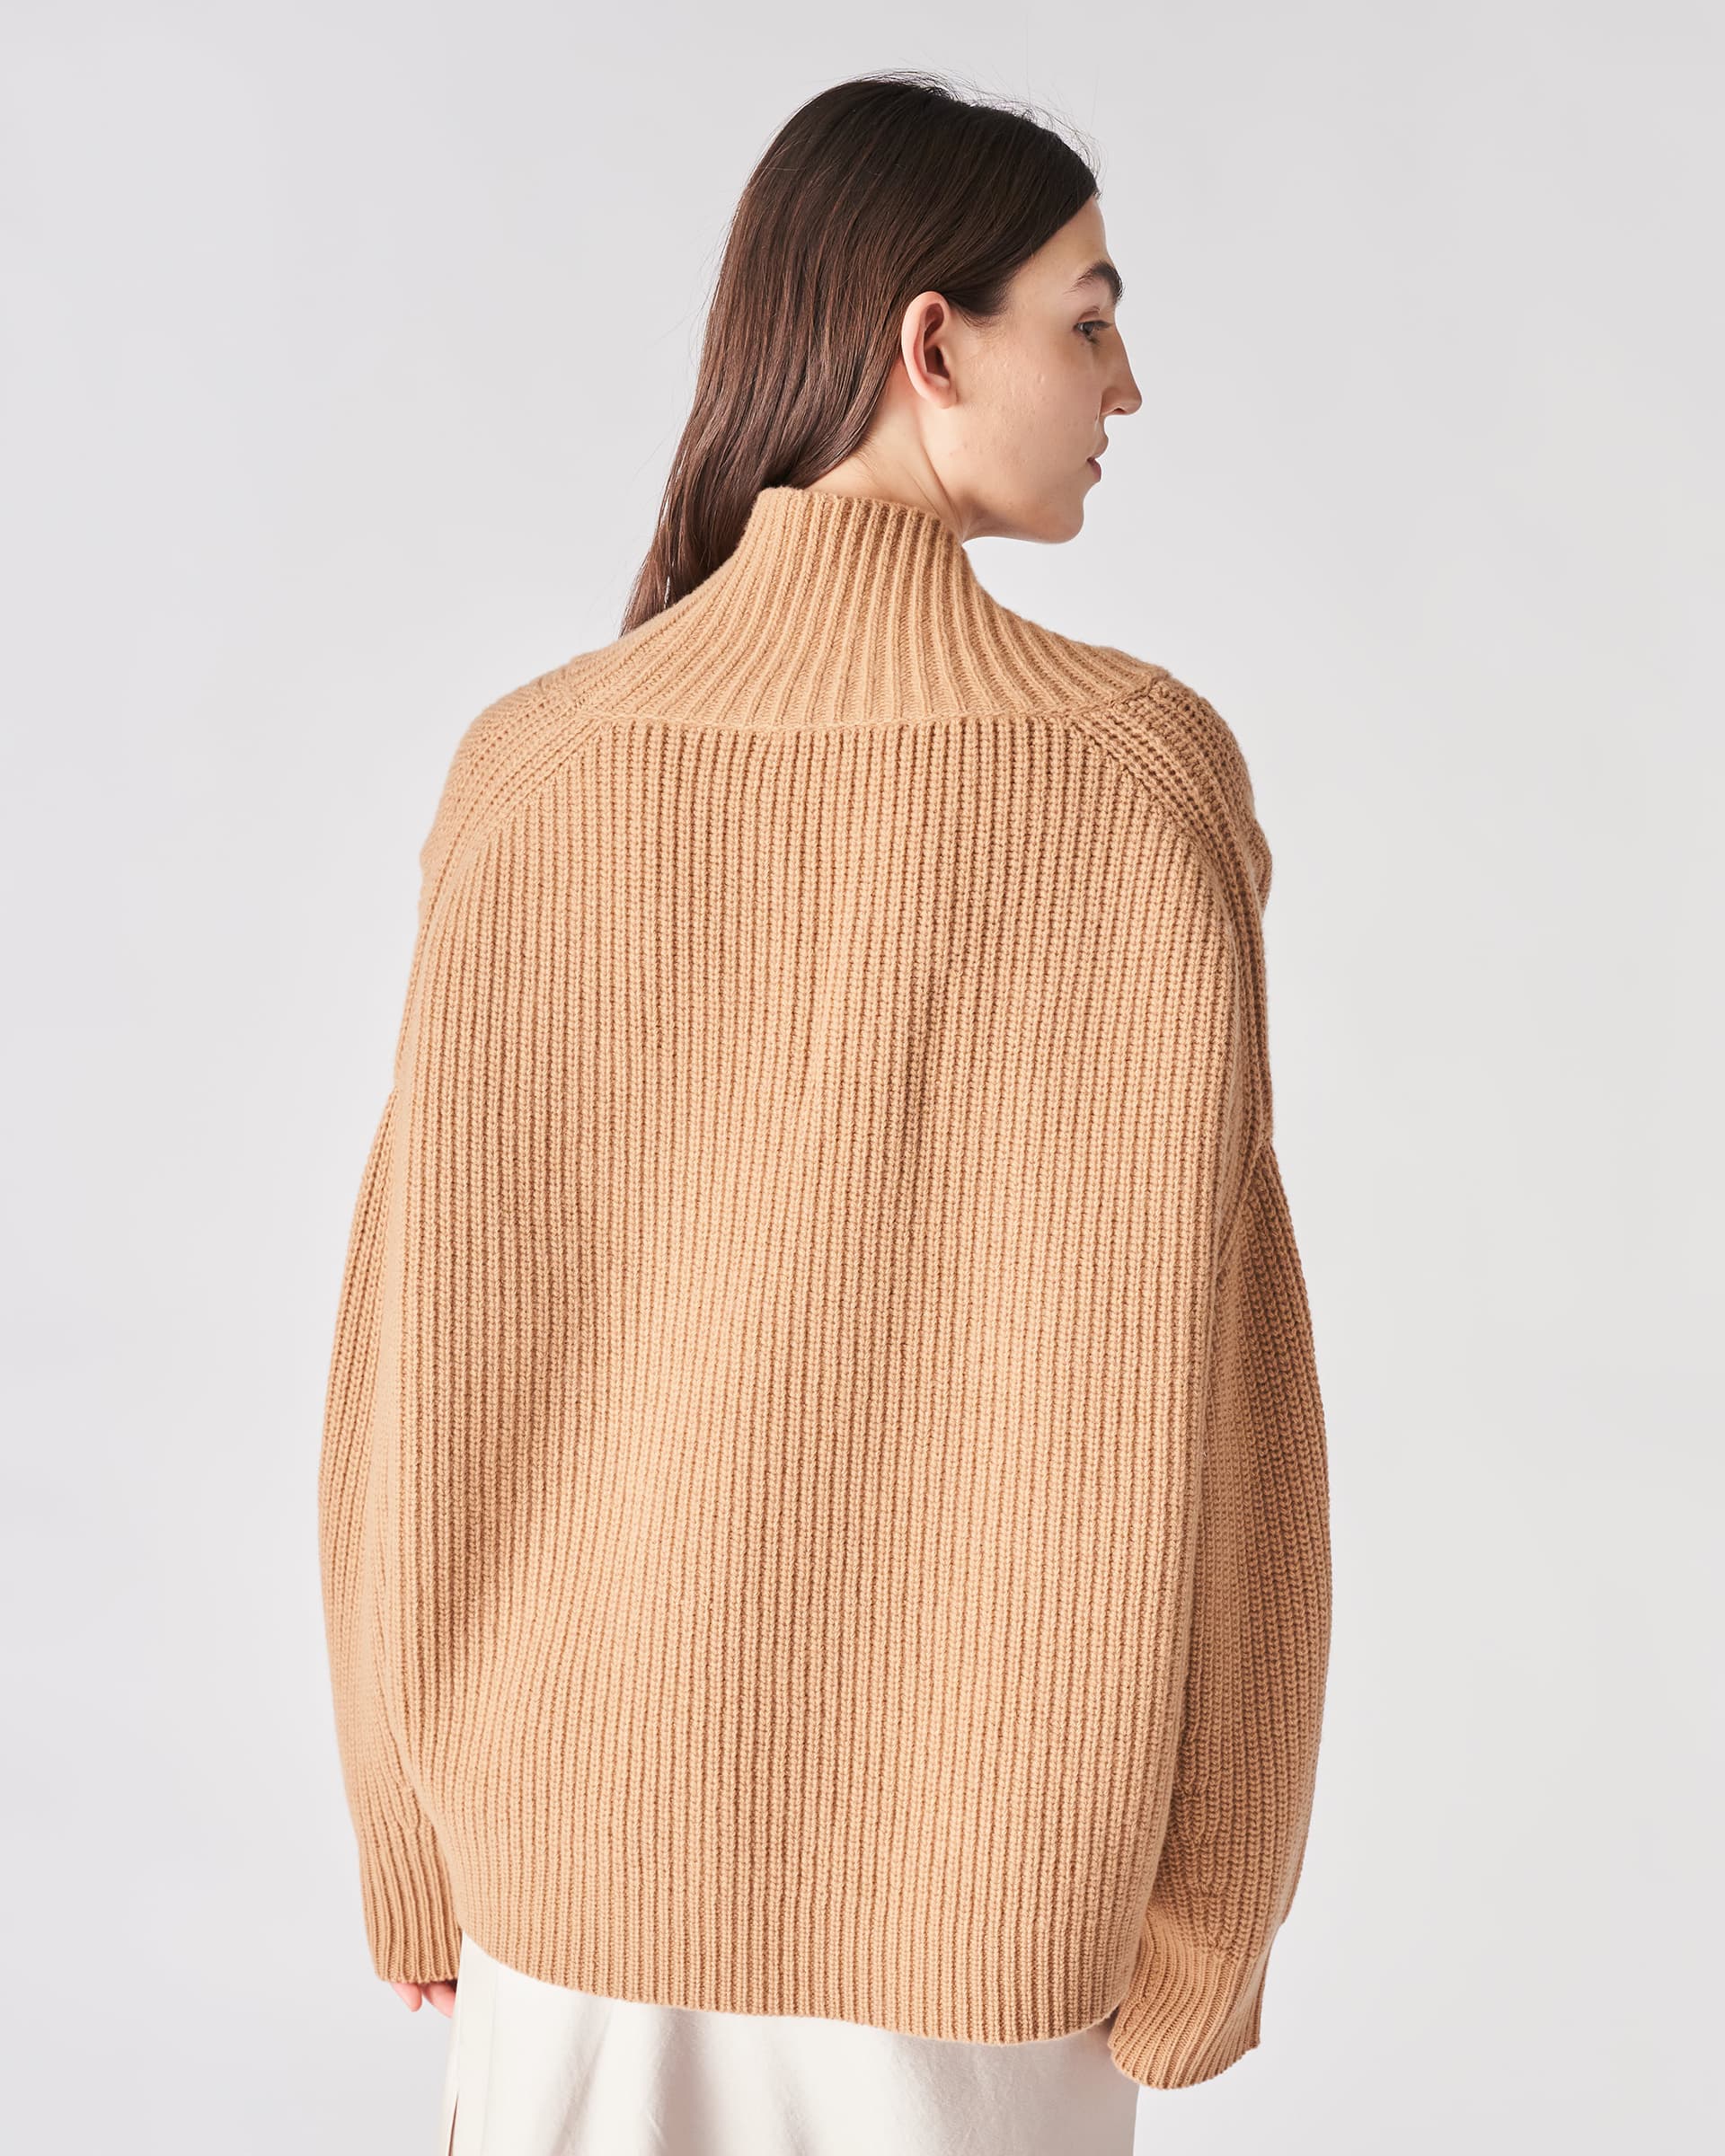 The Market Store | English Ribbed Turtleneck Sweater